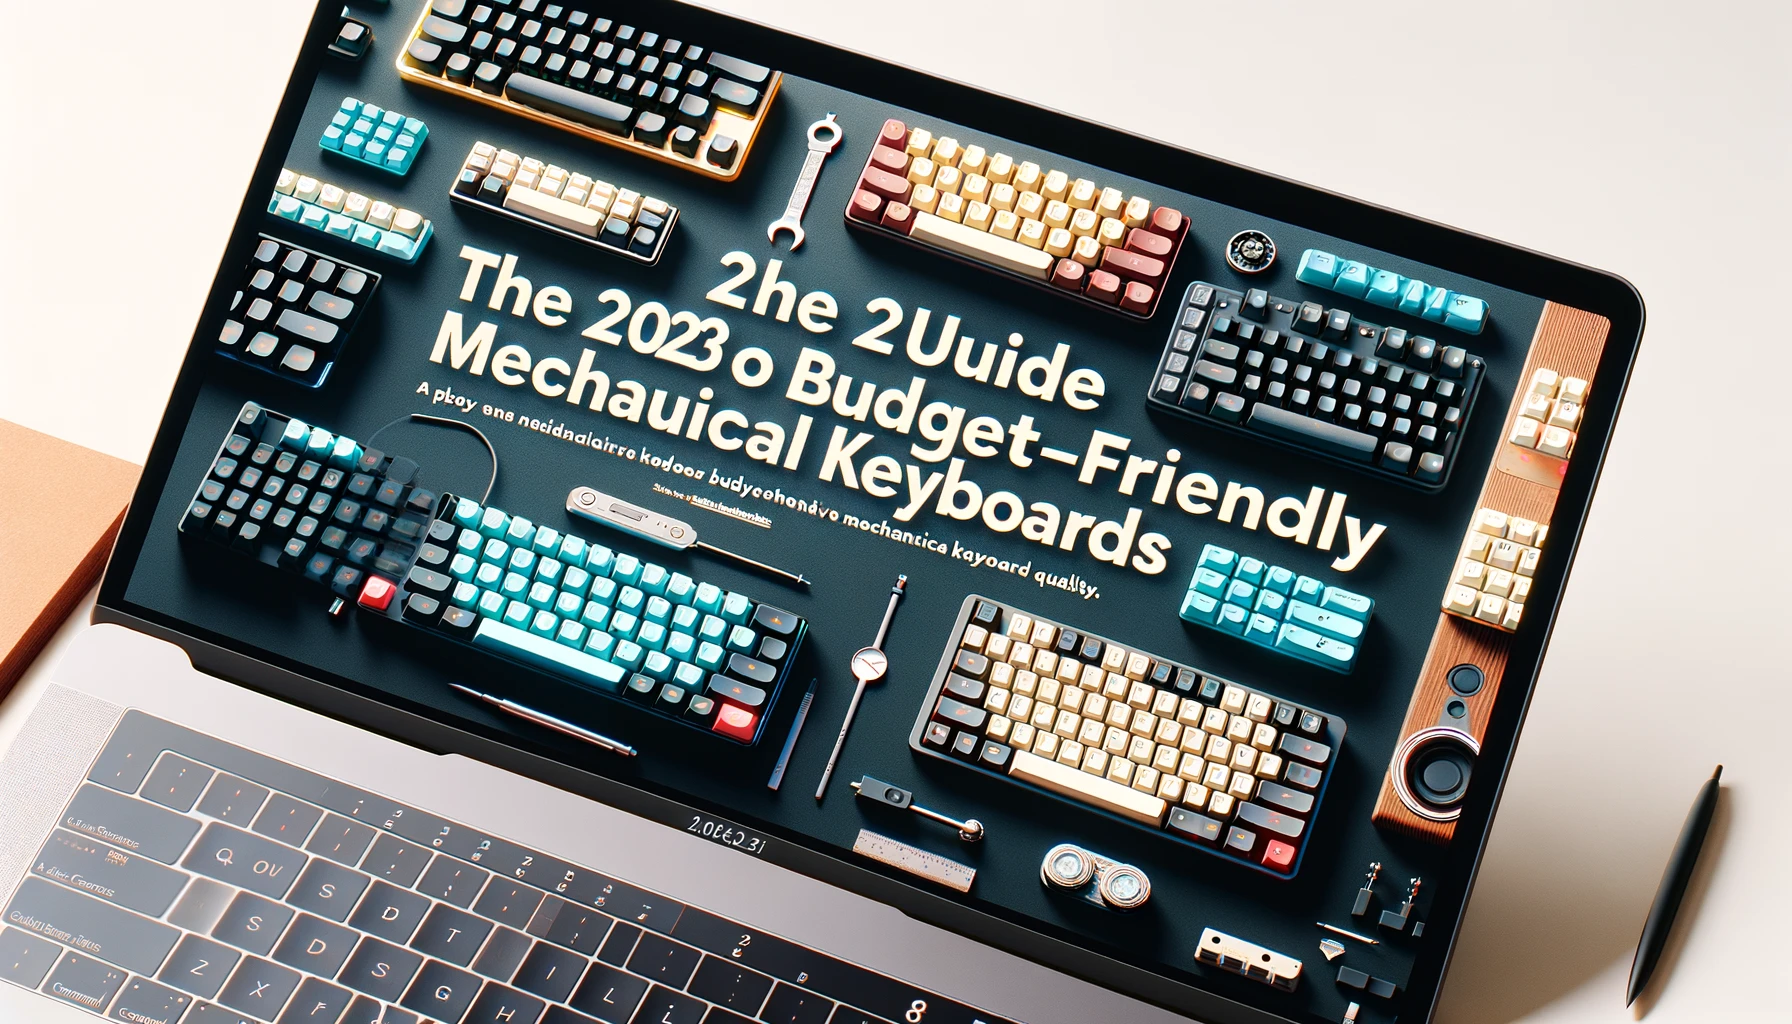 Budget-Friendly Mechanical Keyboards